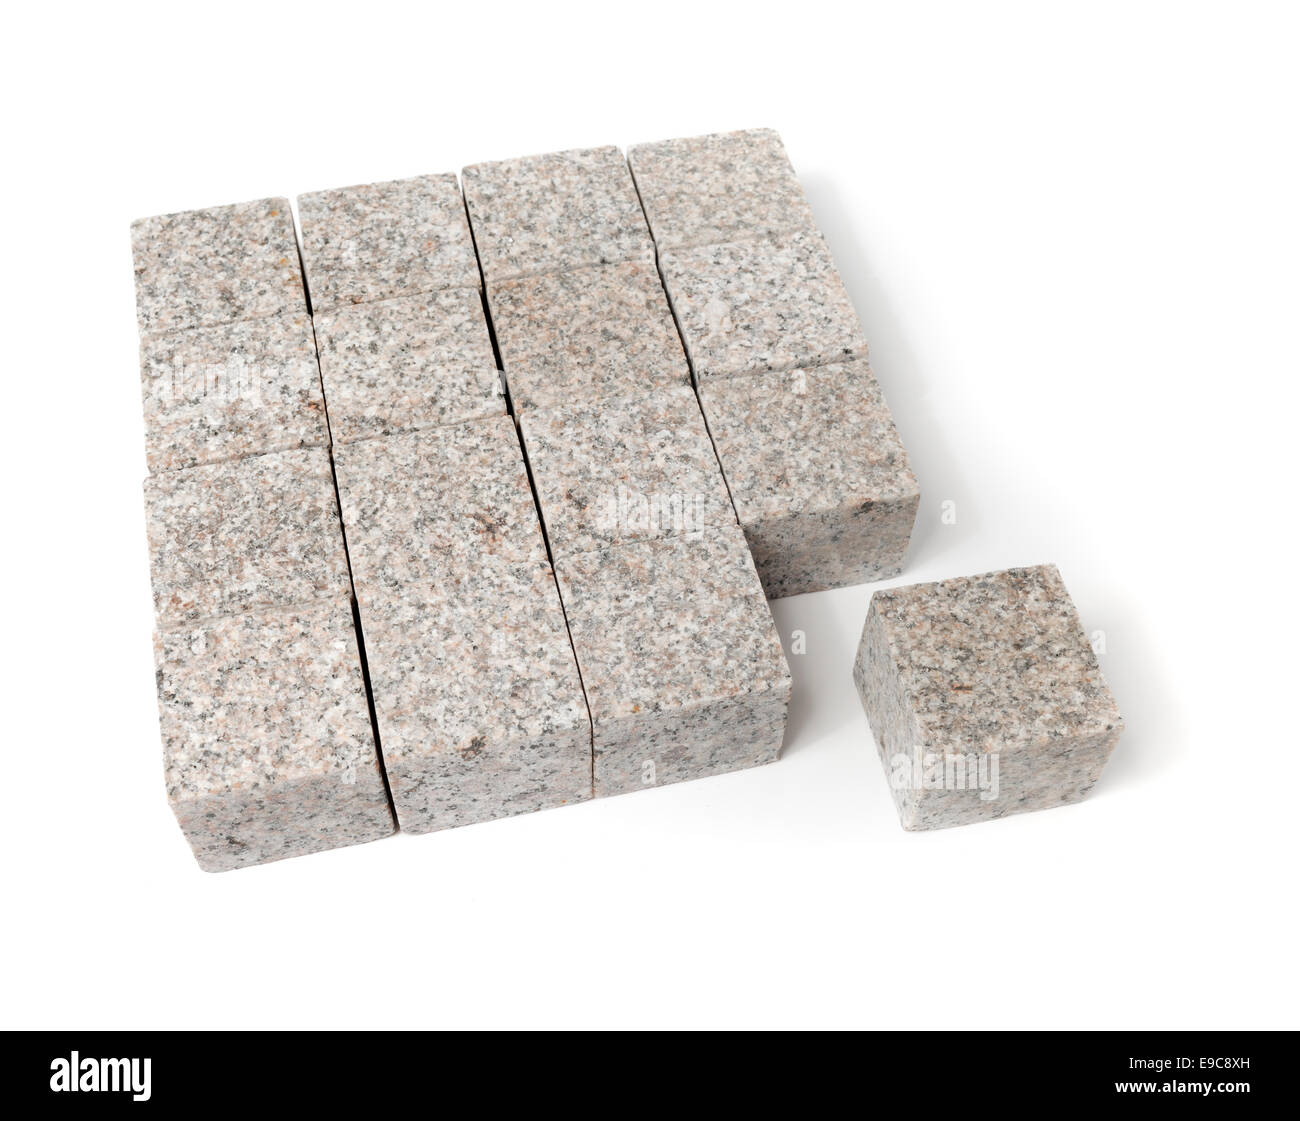 Square shape of blocks made of granite rock. Stock Photo